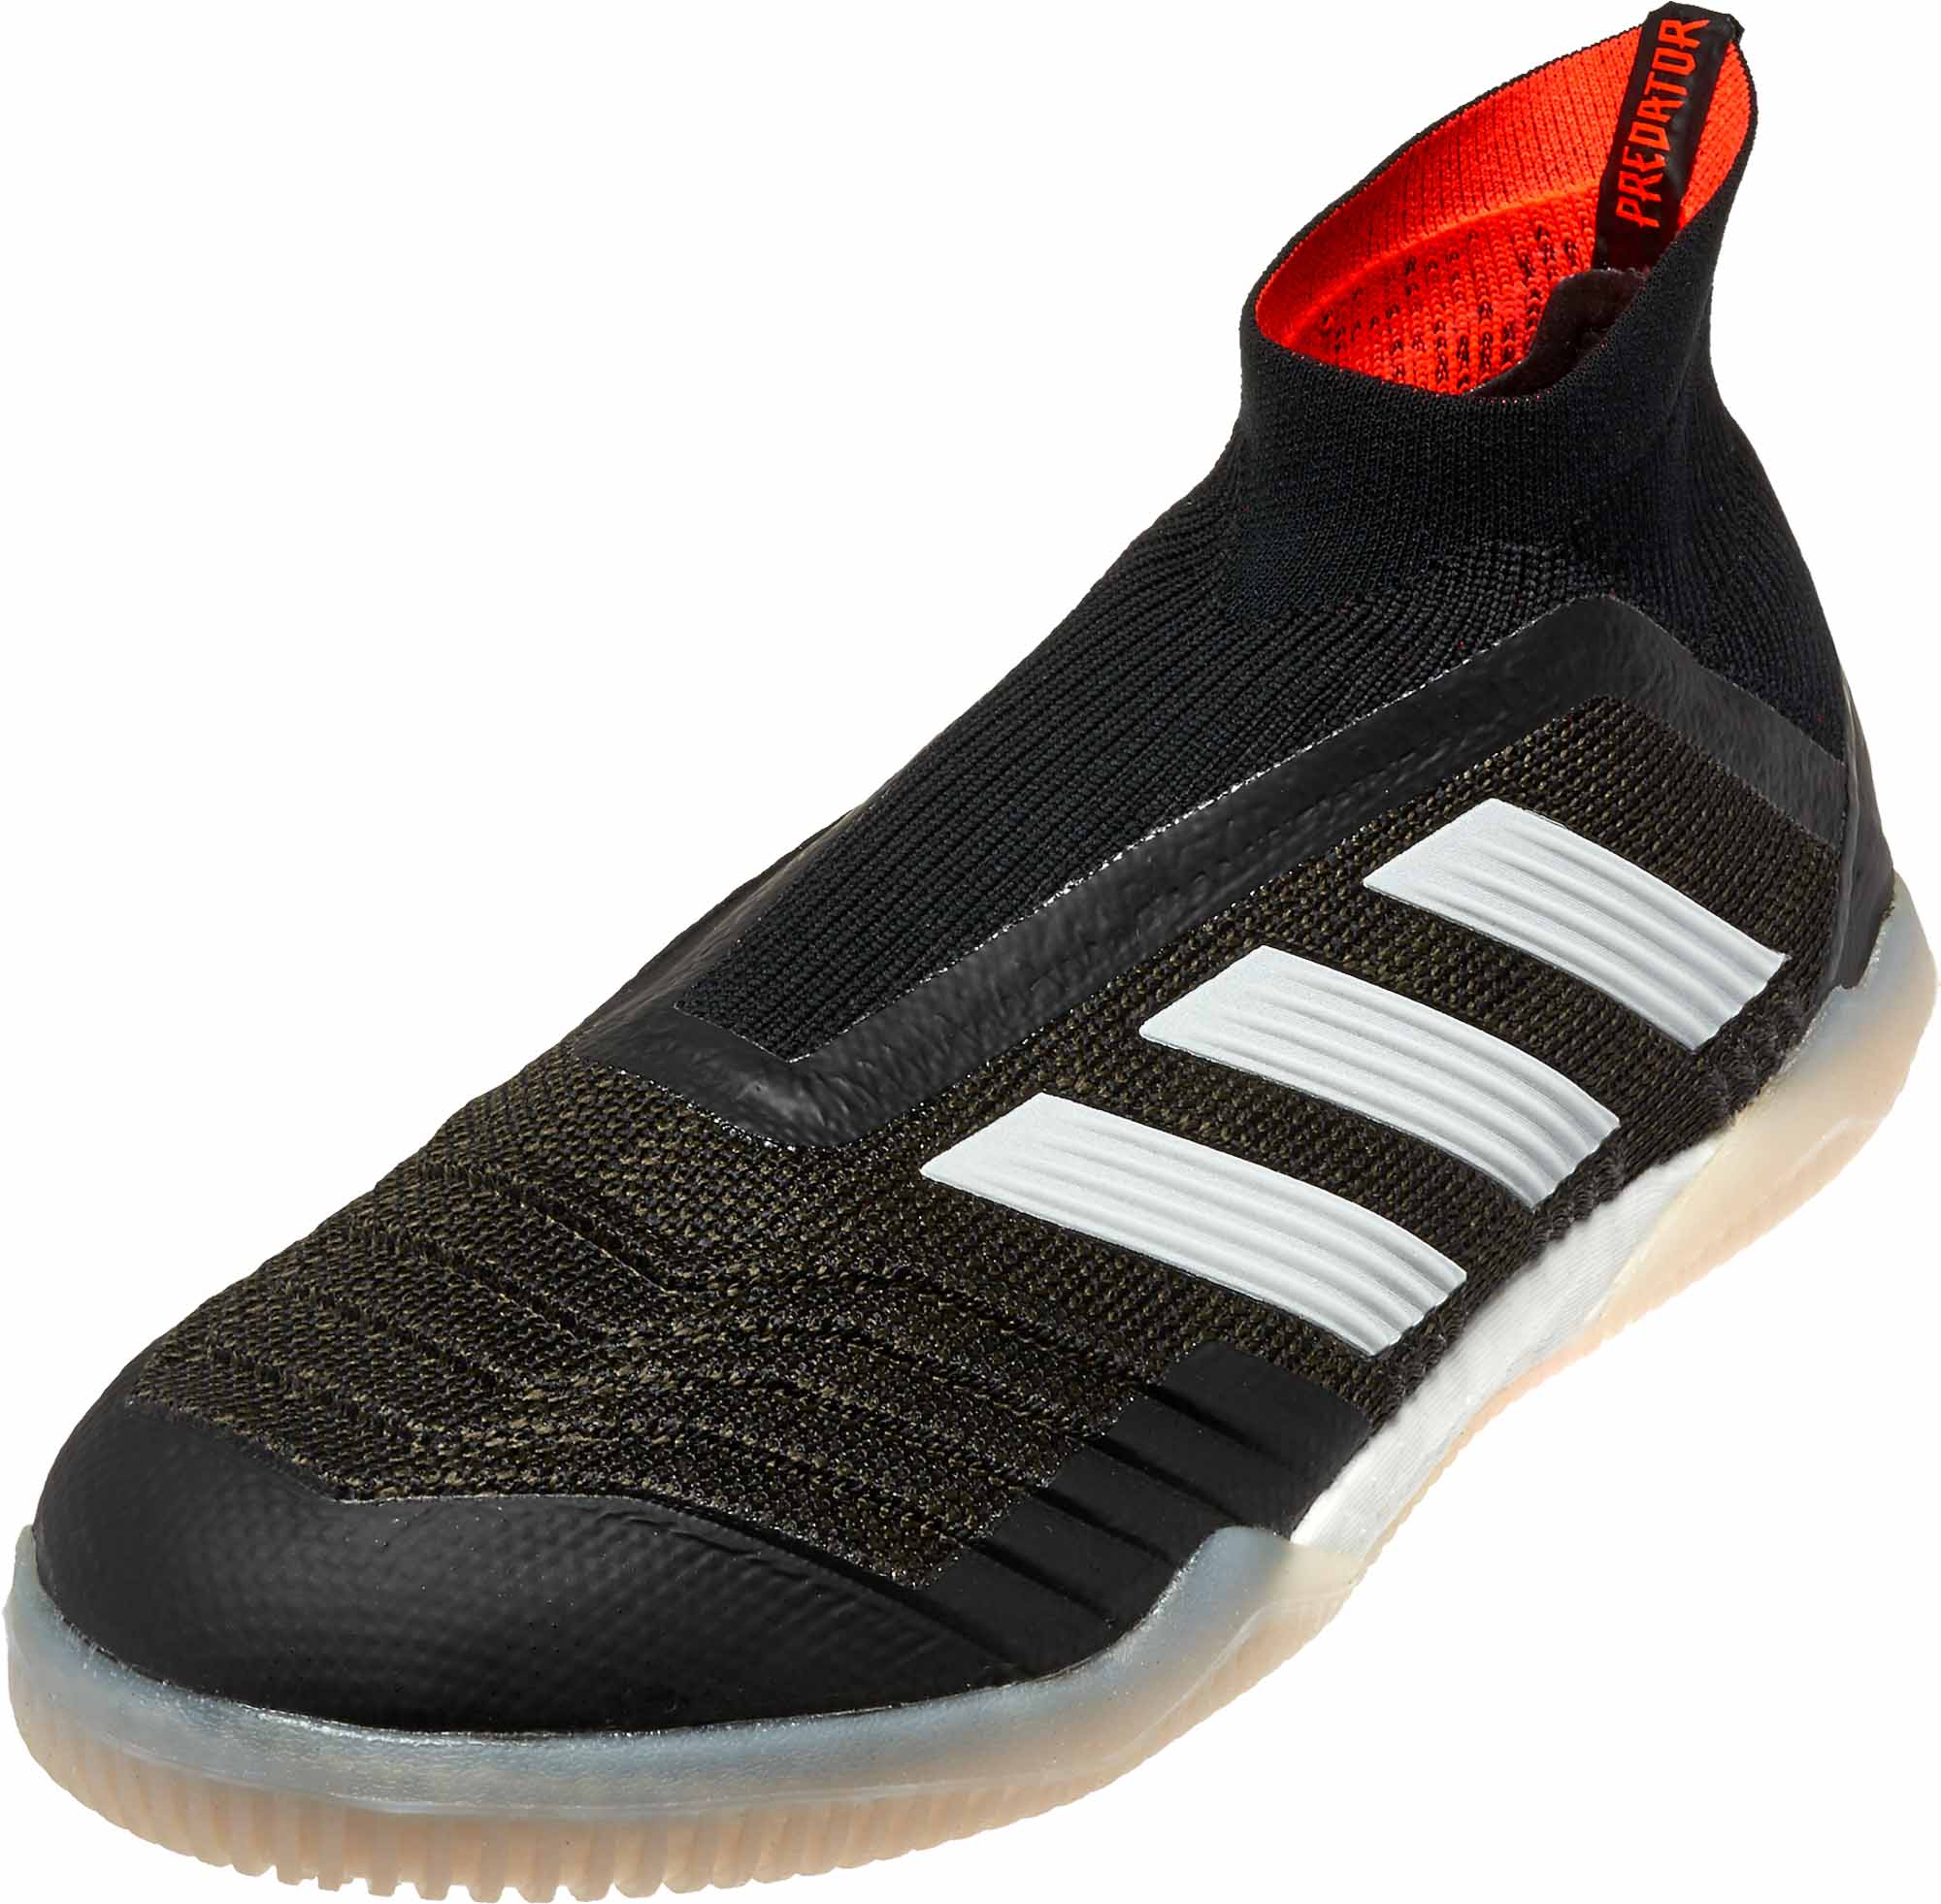 adidas Predator Tango 18 IN - Black Indoor Soccer Shoes